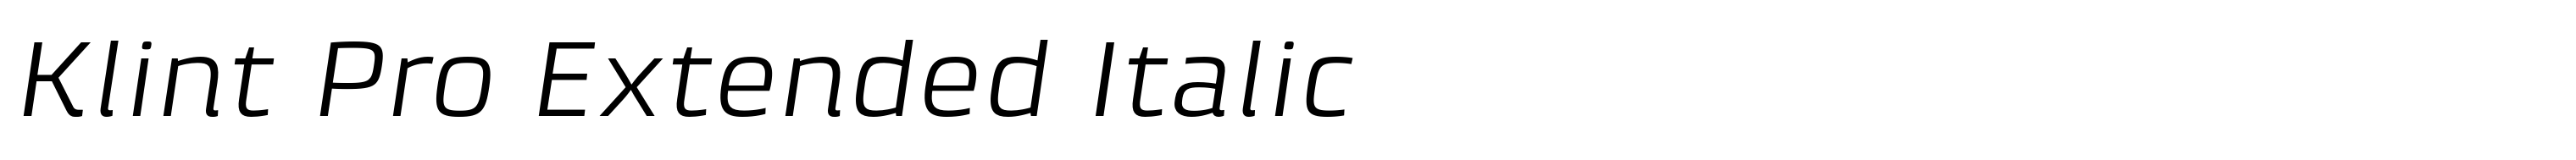 Klint Pro Extended Italic